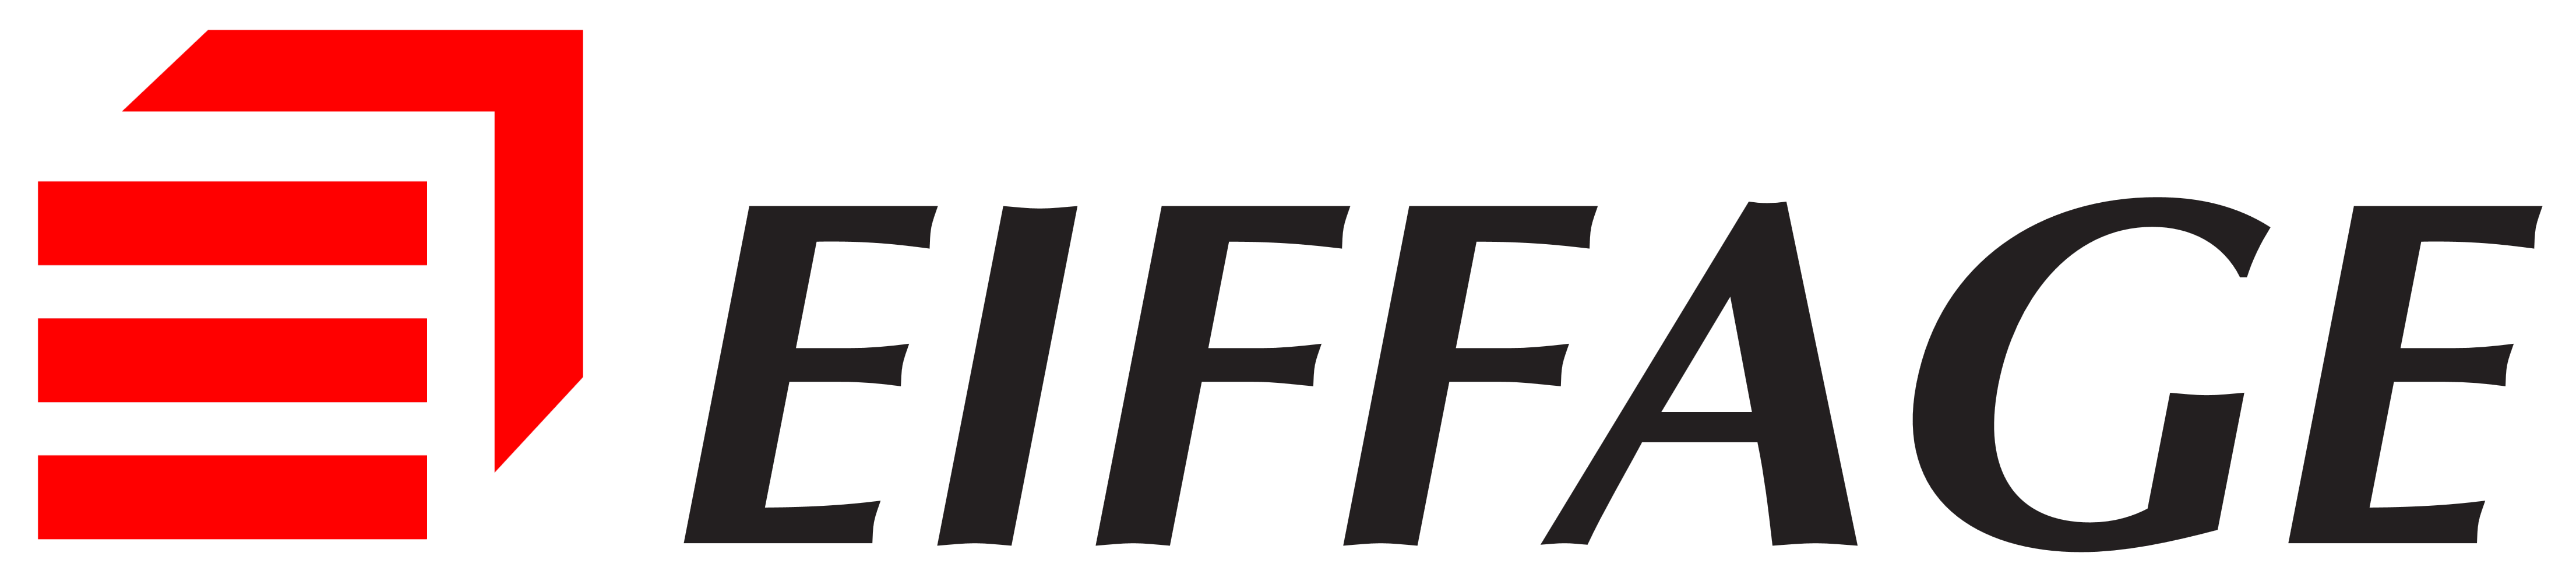 Eiffage Logo - Eiffage – Logos Download